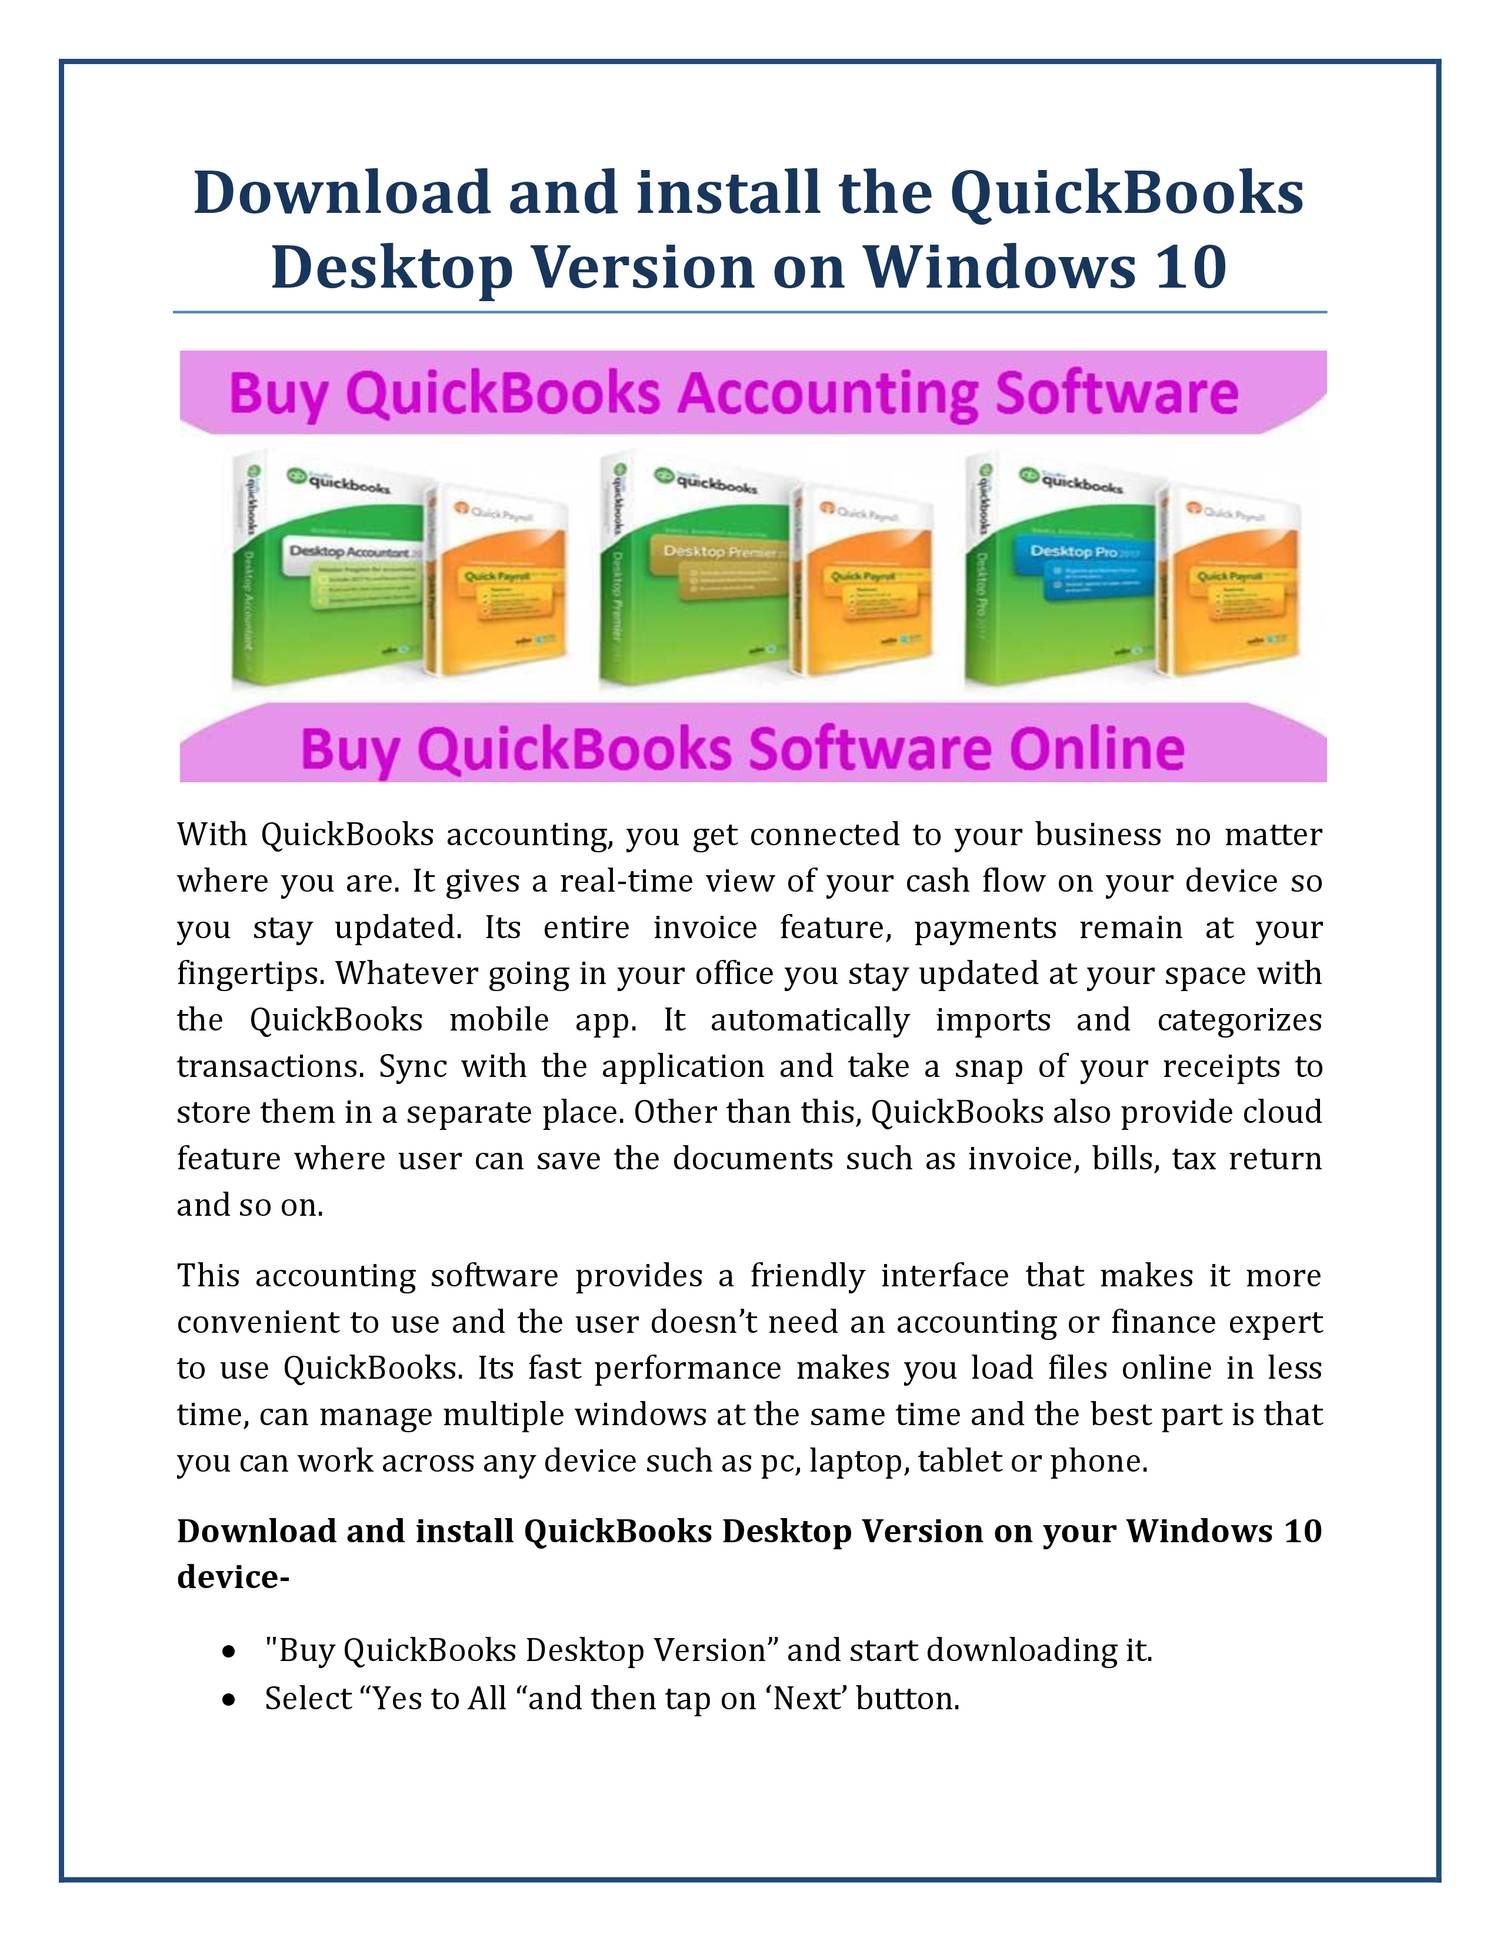 quickbooks desktop download if already purchased